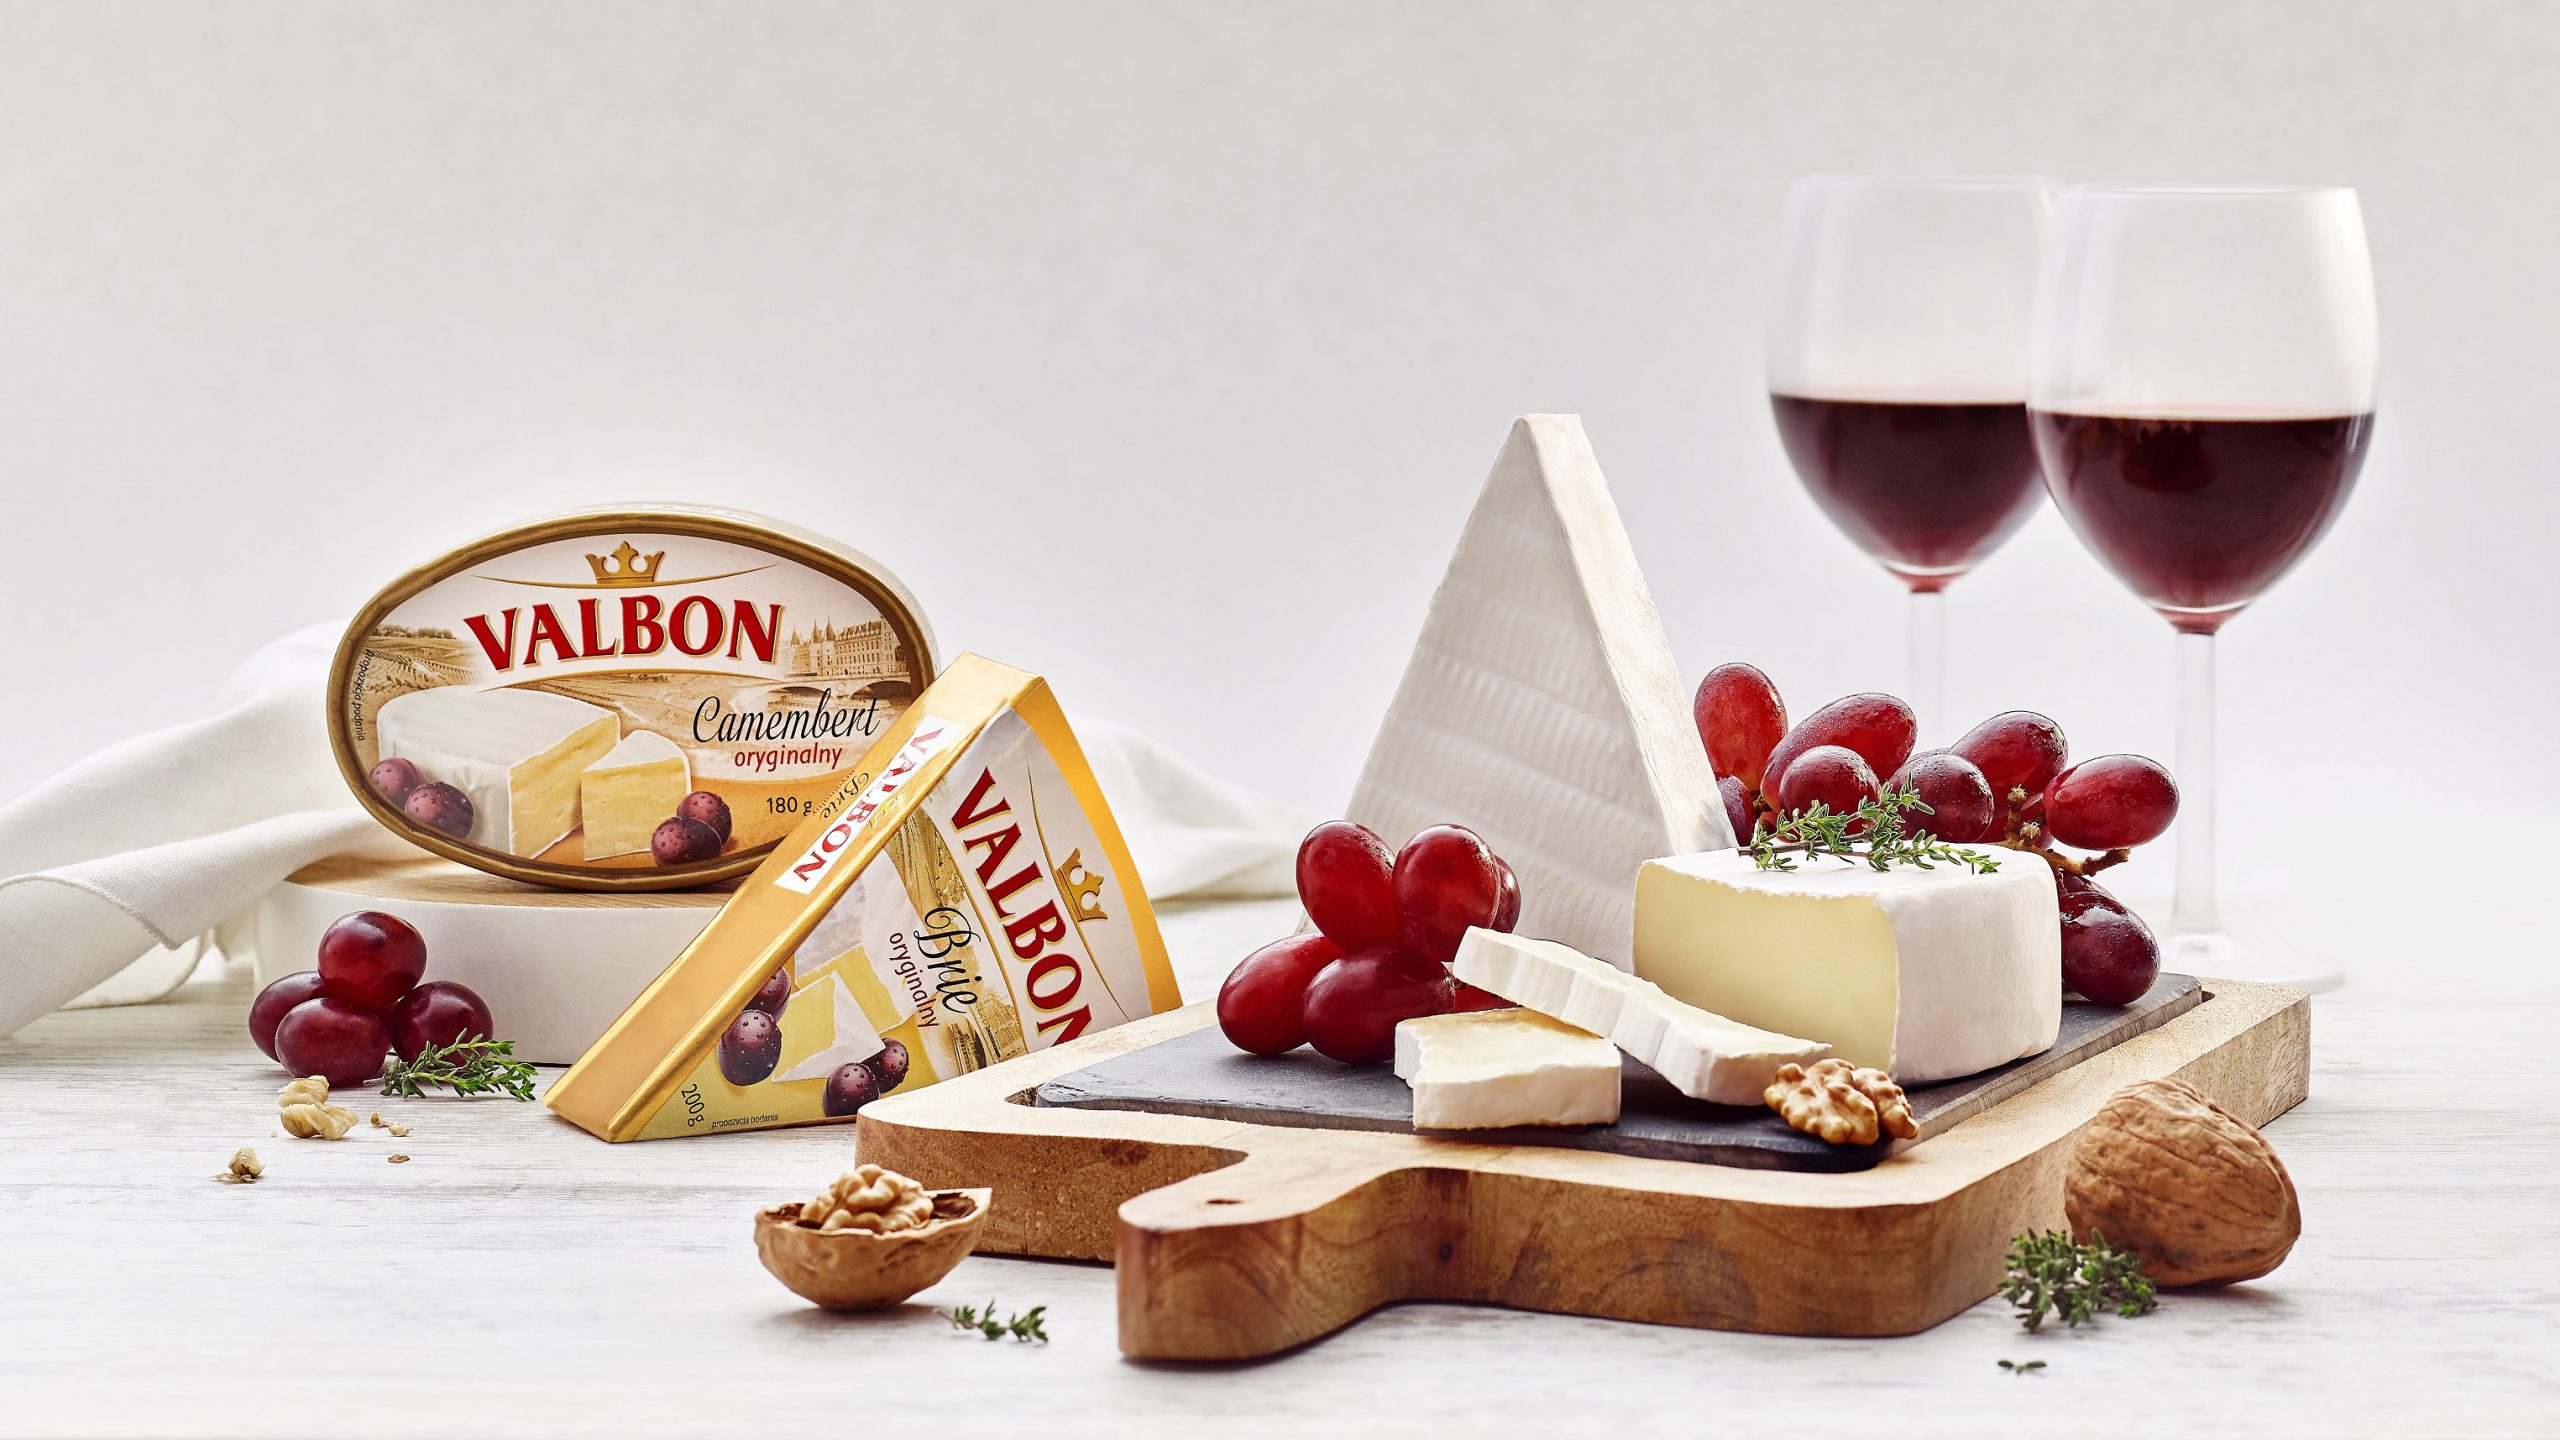 Valbon – spotkania z klasyką smaku, każdego dnia